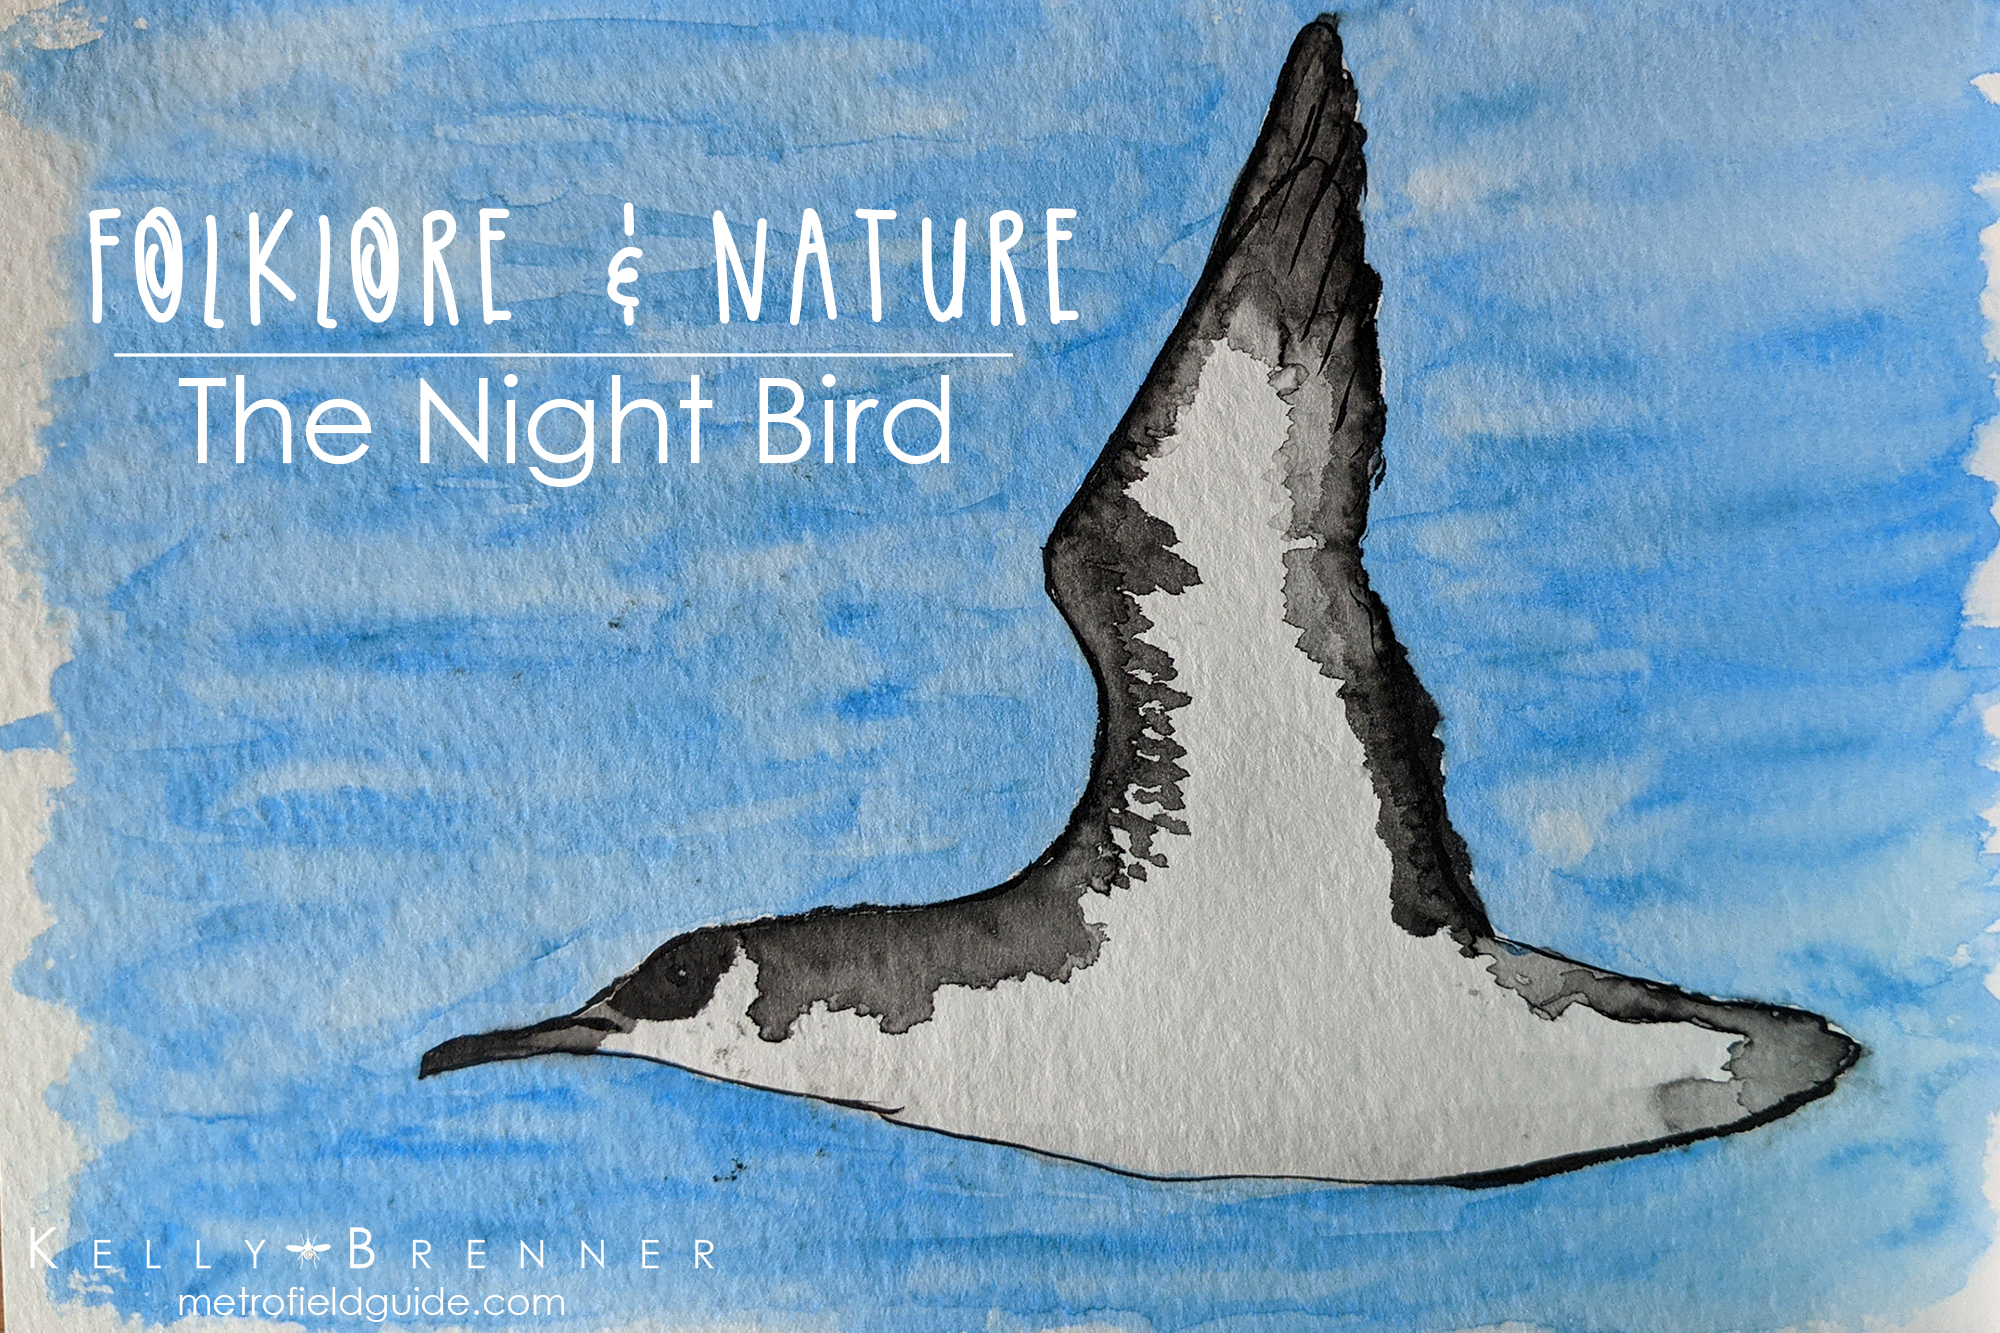 Folklore & Nature: The Night Bird